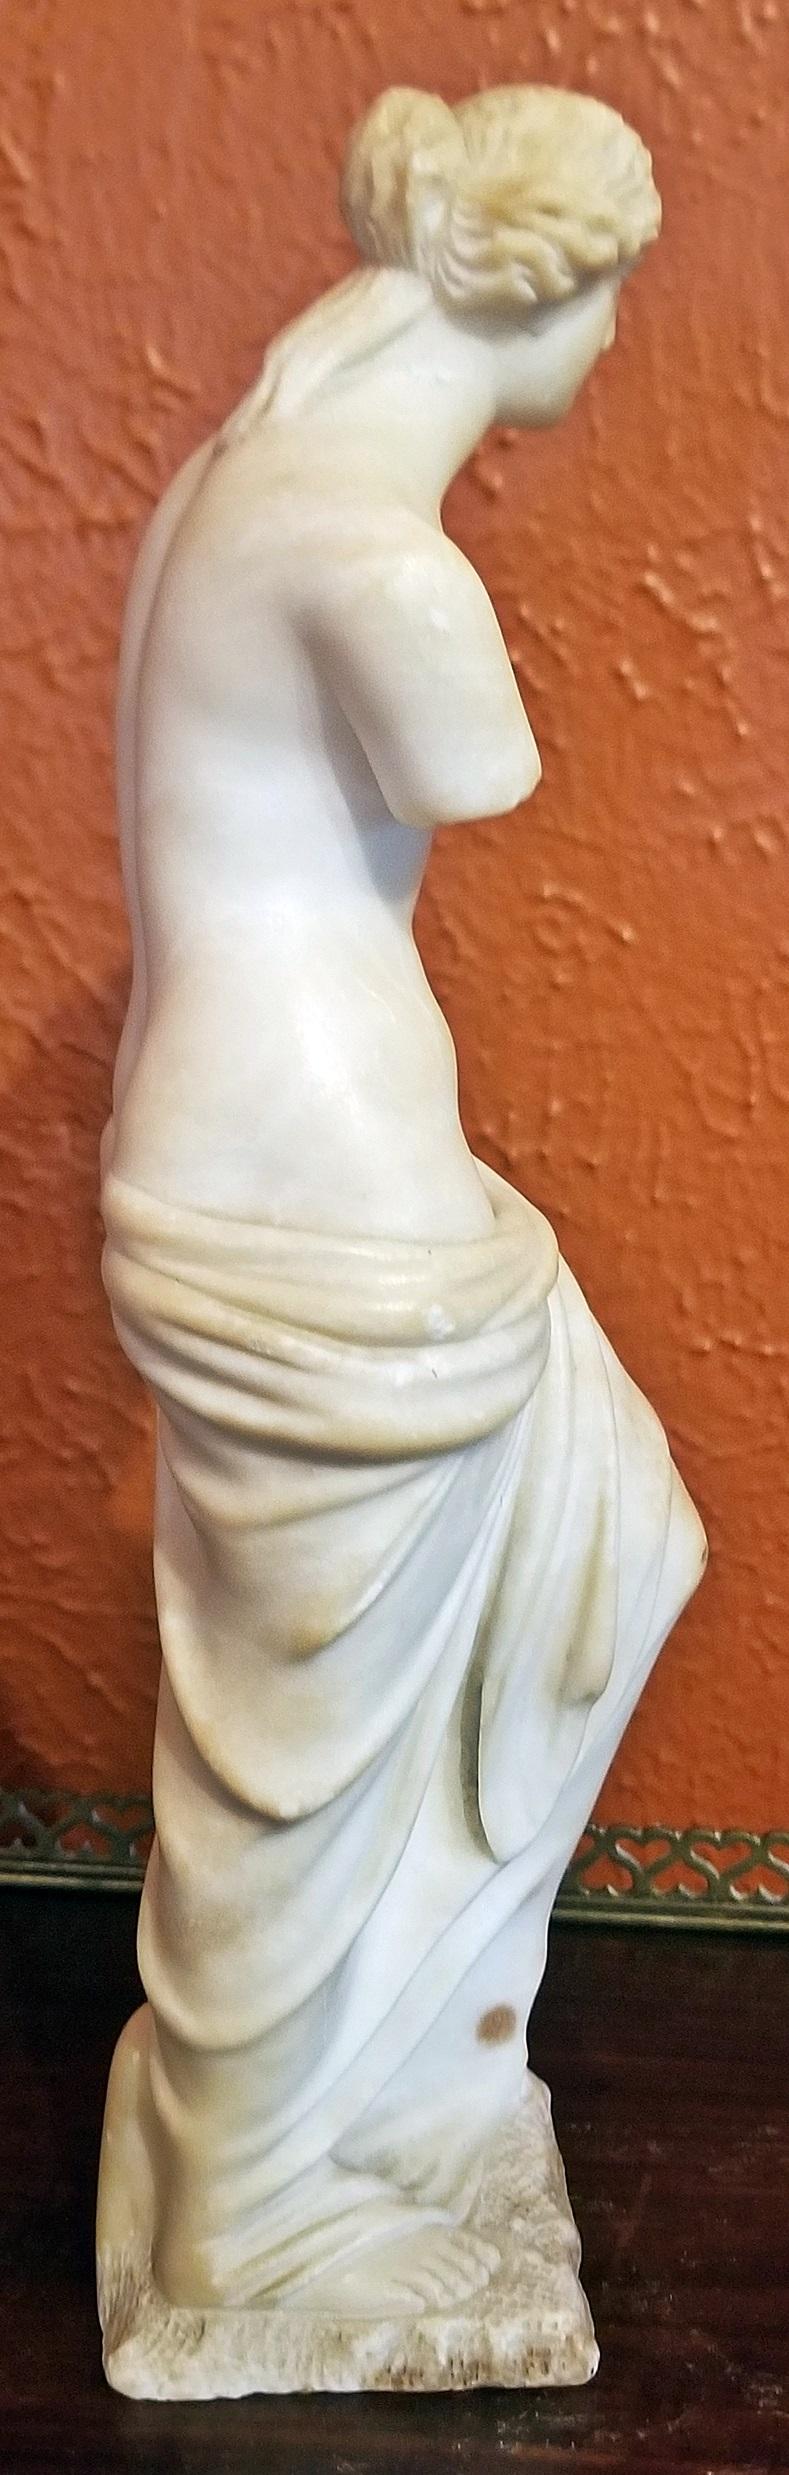 Hand-Carved 19th century Italian Marble Figurine of Venus De Milo